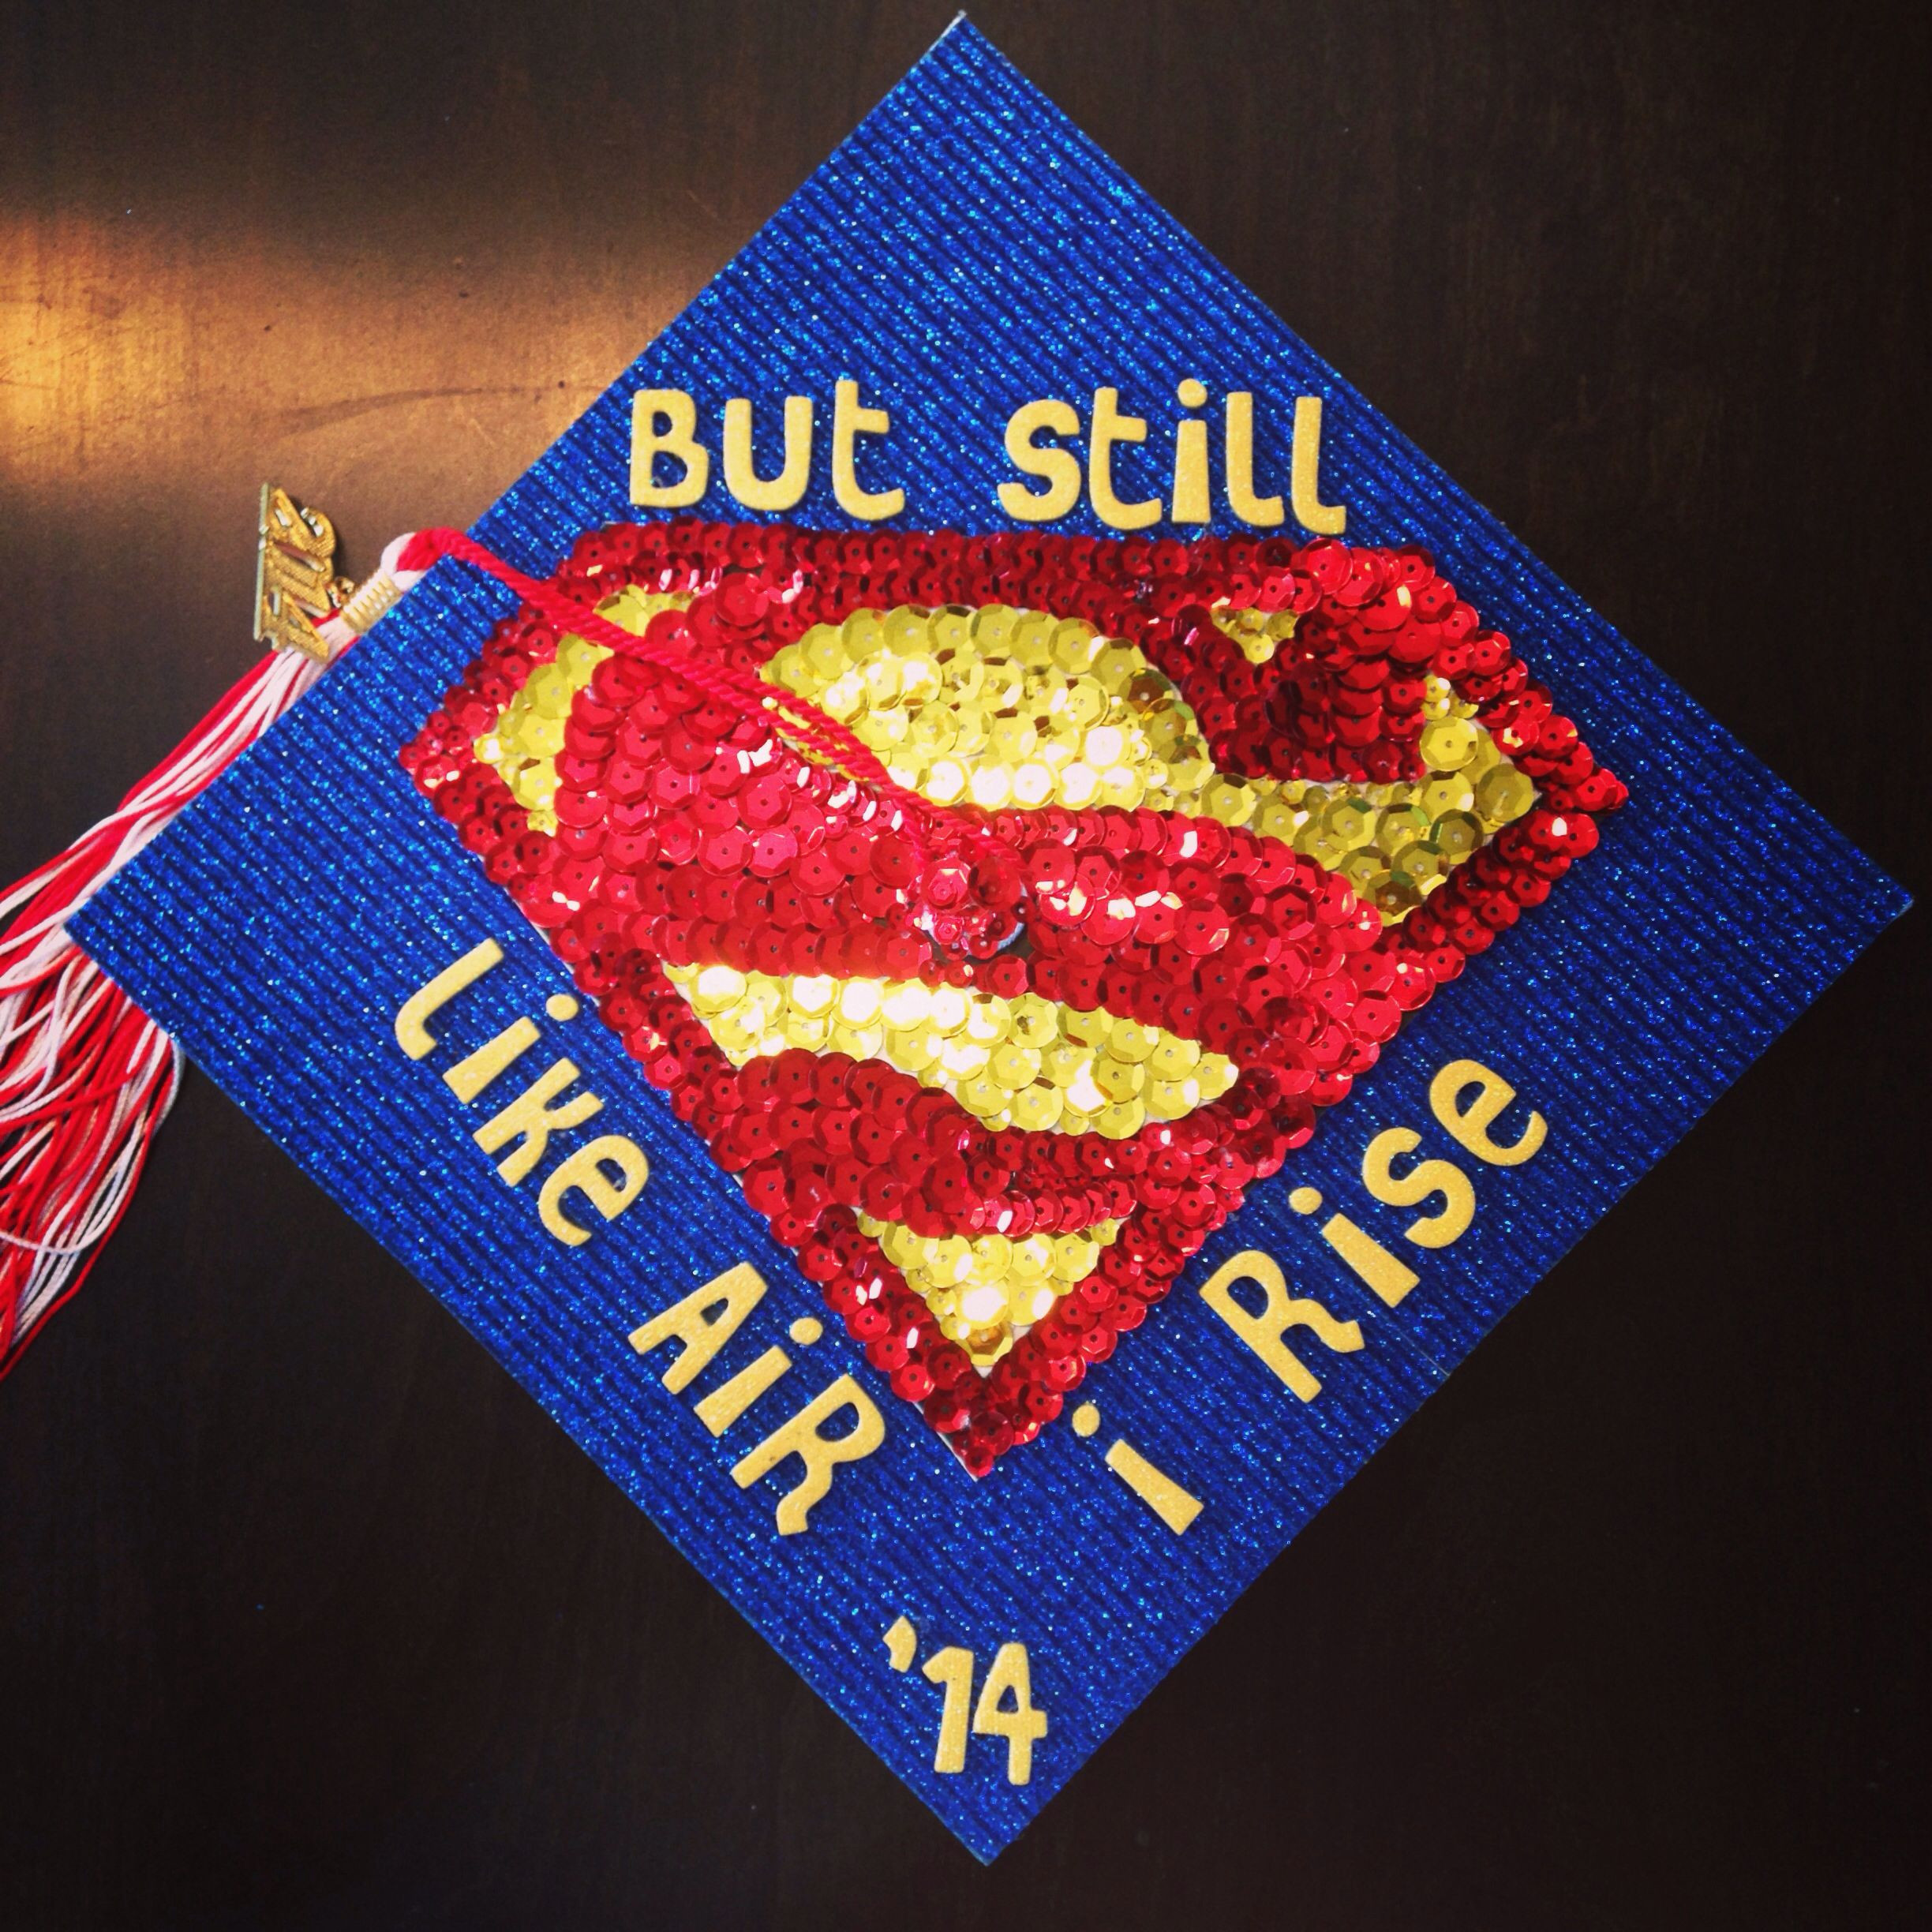 Maya Angelou Graduation Quotes
 Graduation cap Superman themed quote by Maya Angelou